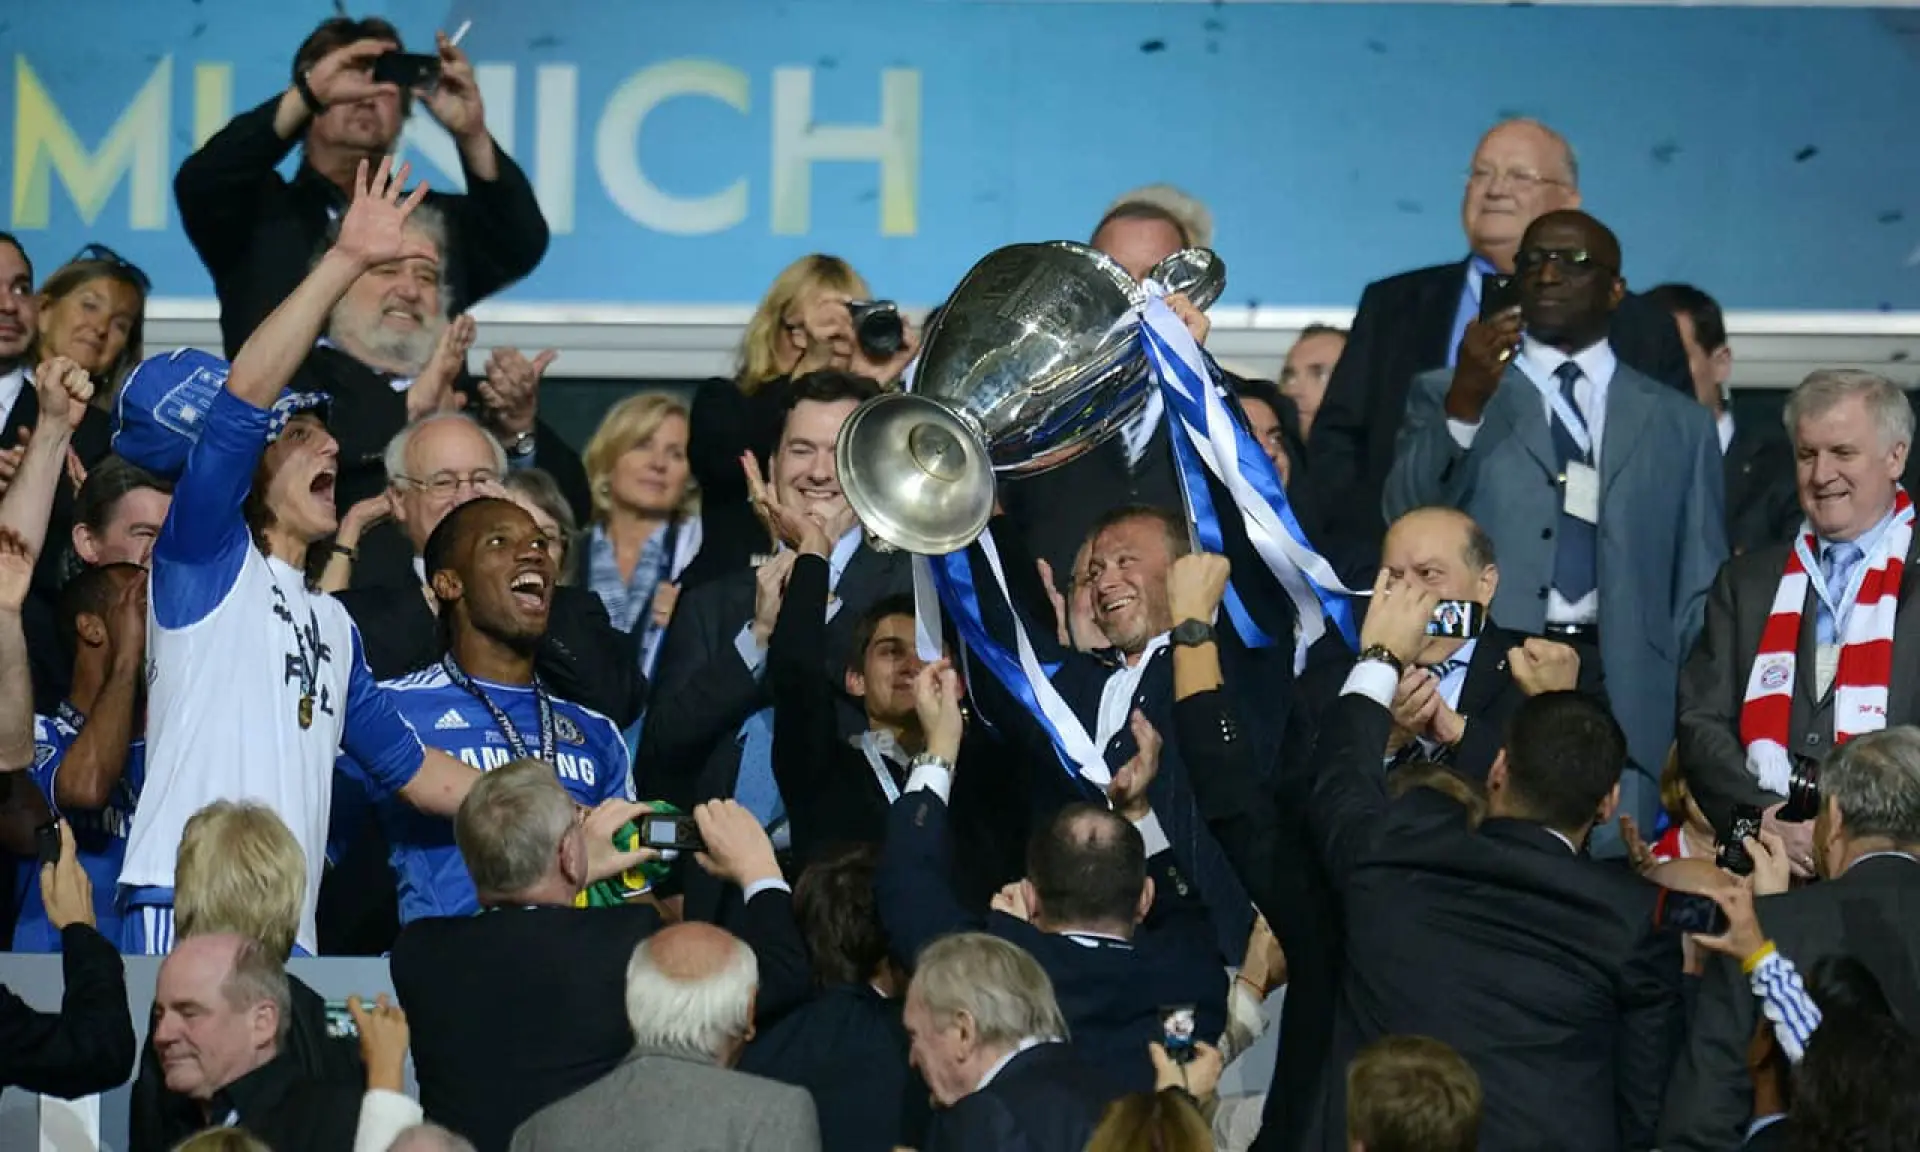 Chelsea, Champions League winners 2012